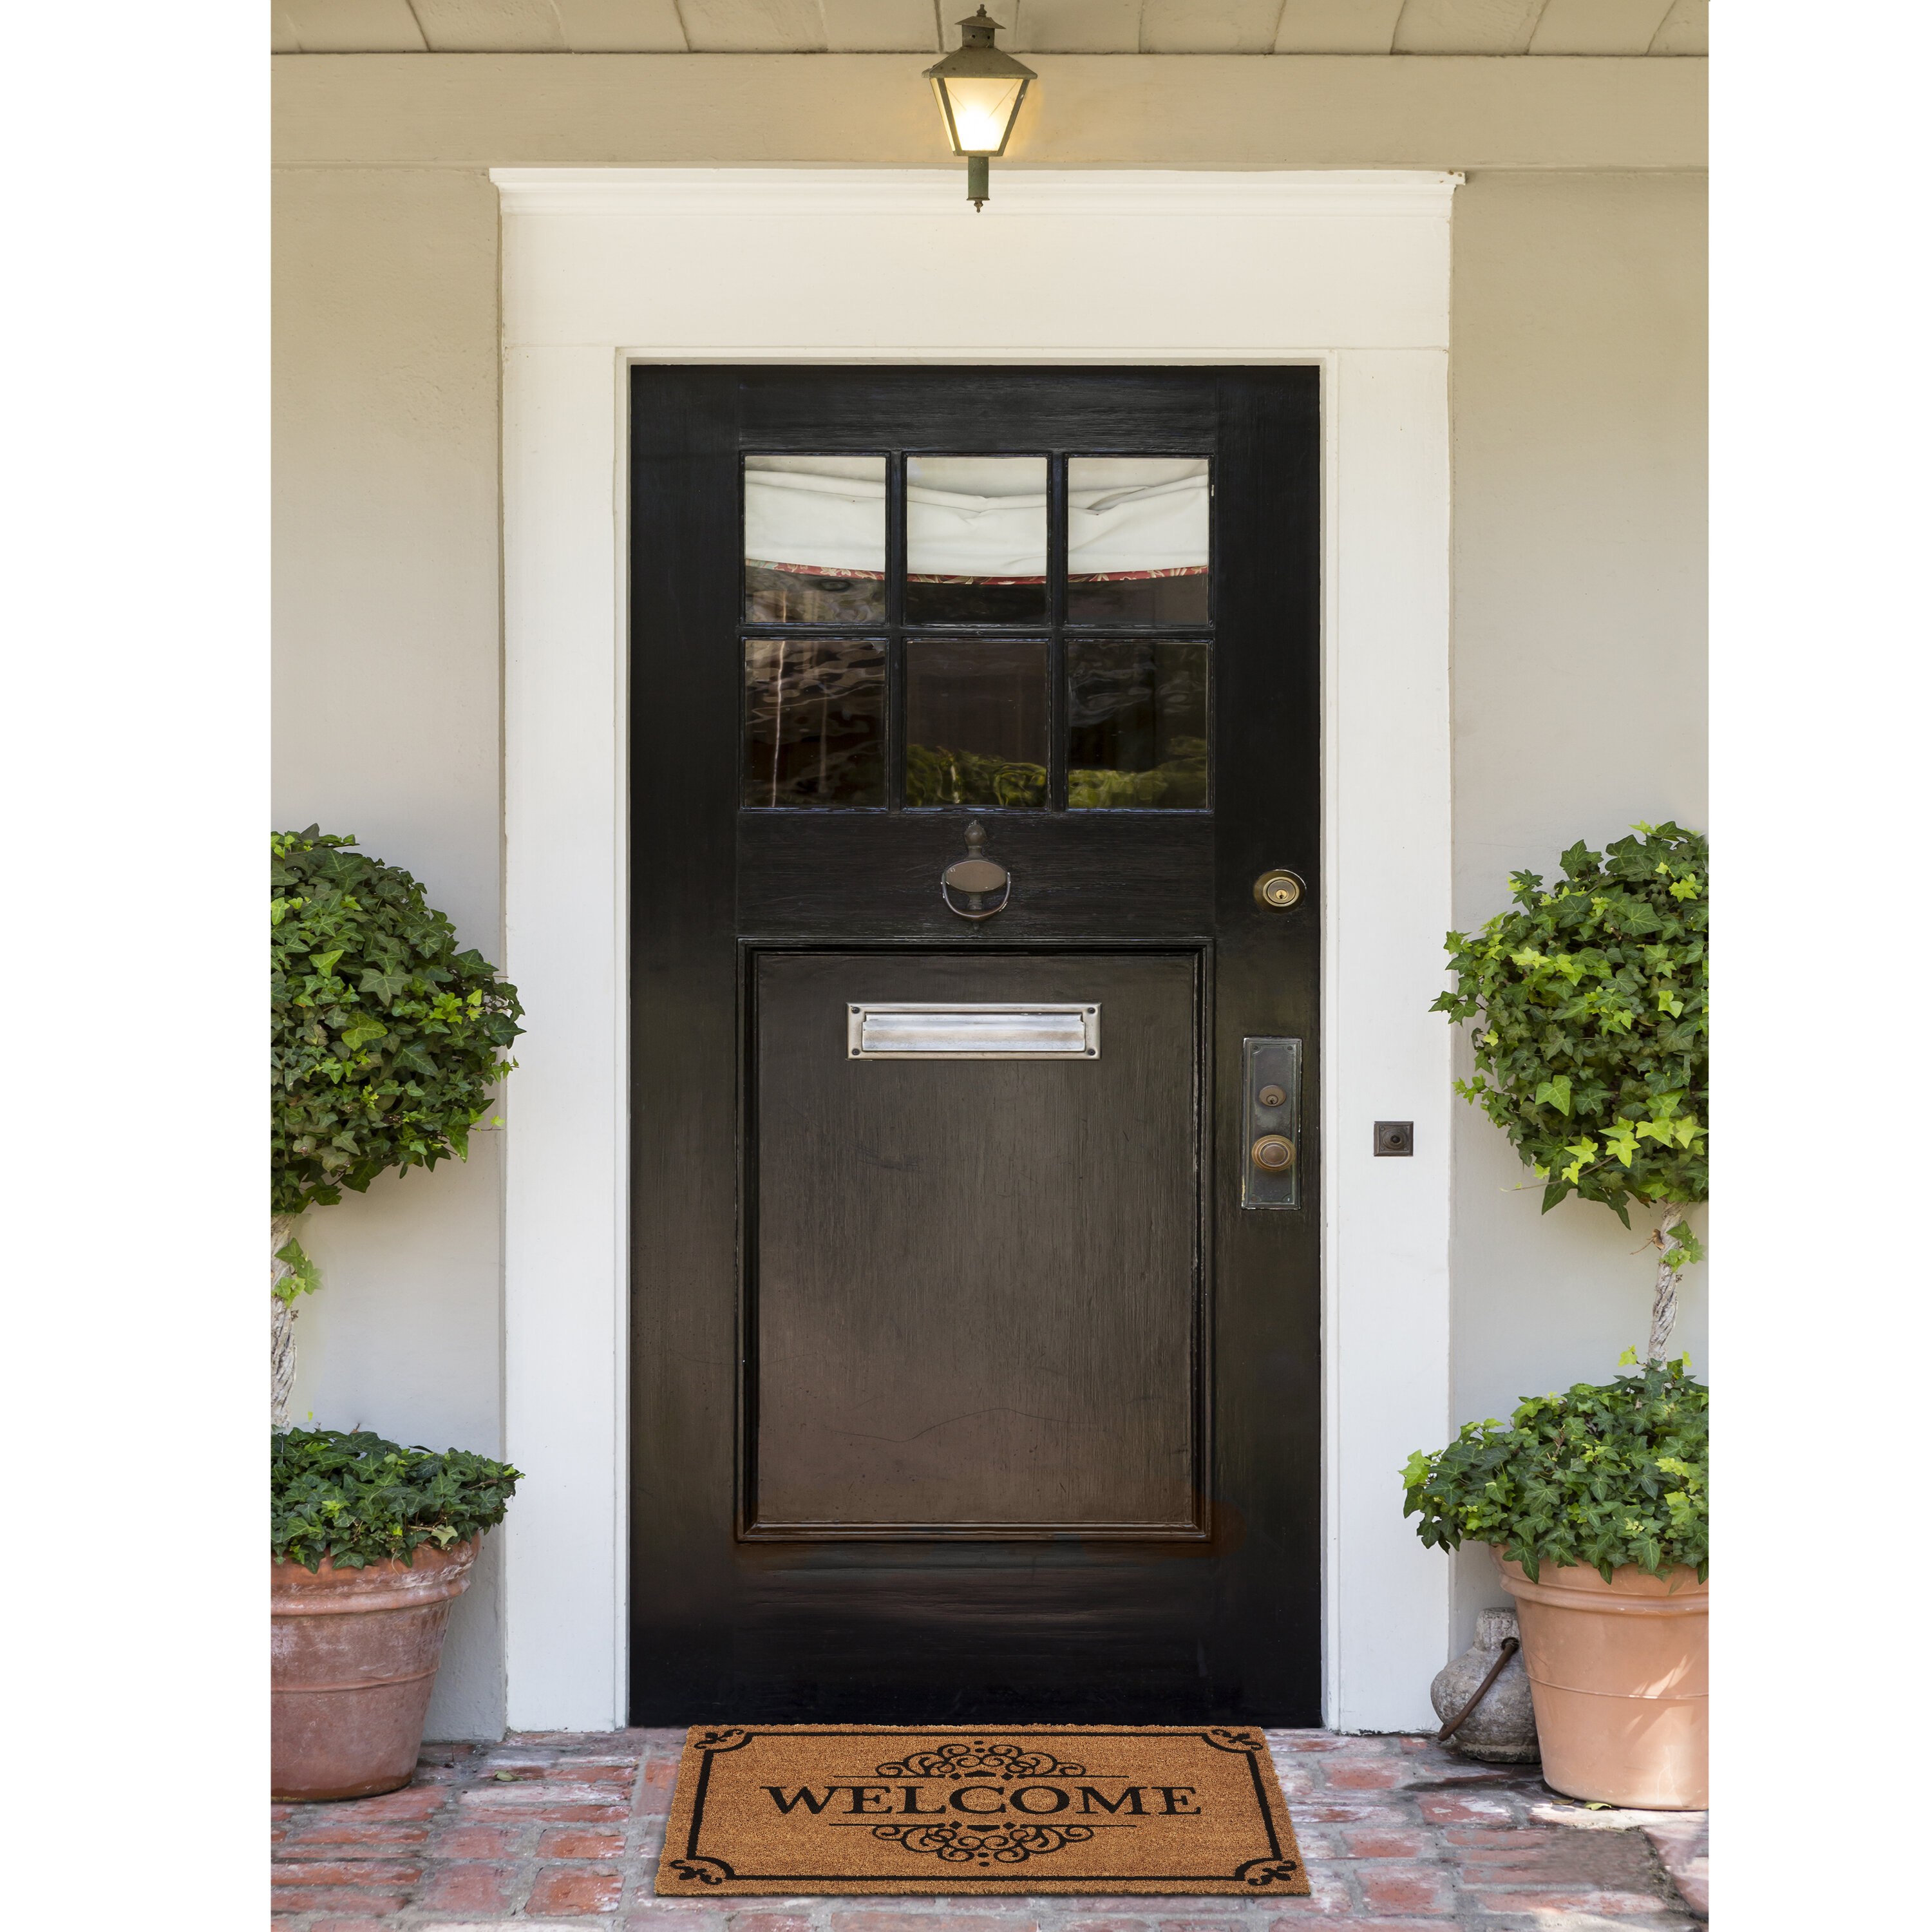 Charlton Home® Groseiller Non-Slip Outdoor Doormat